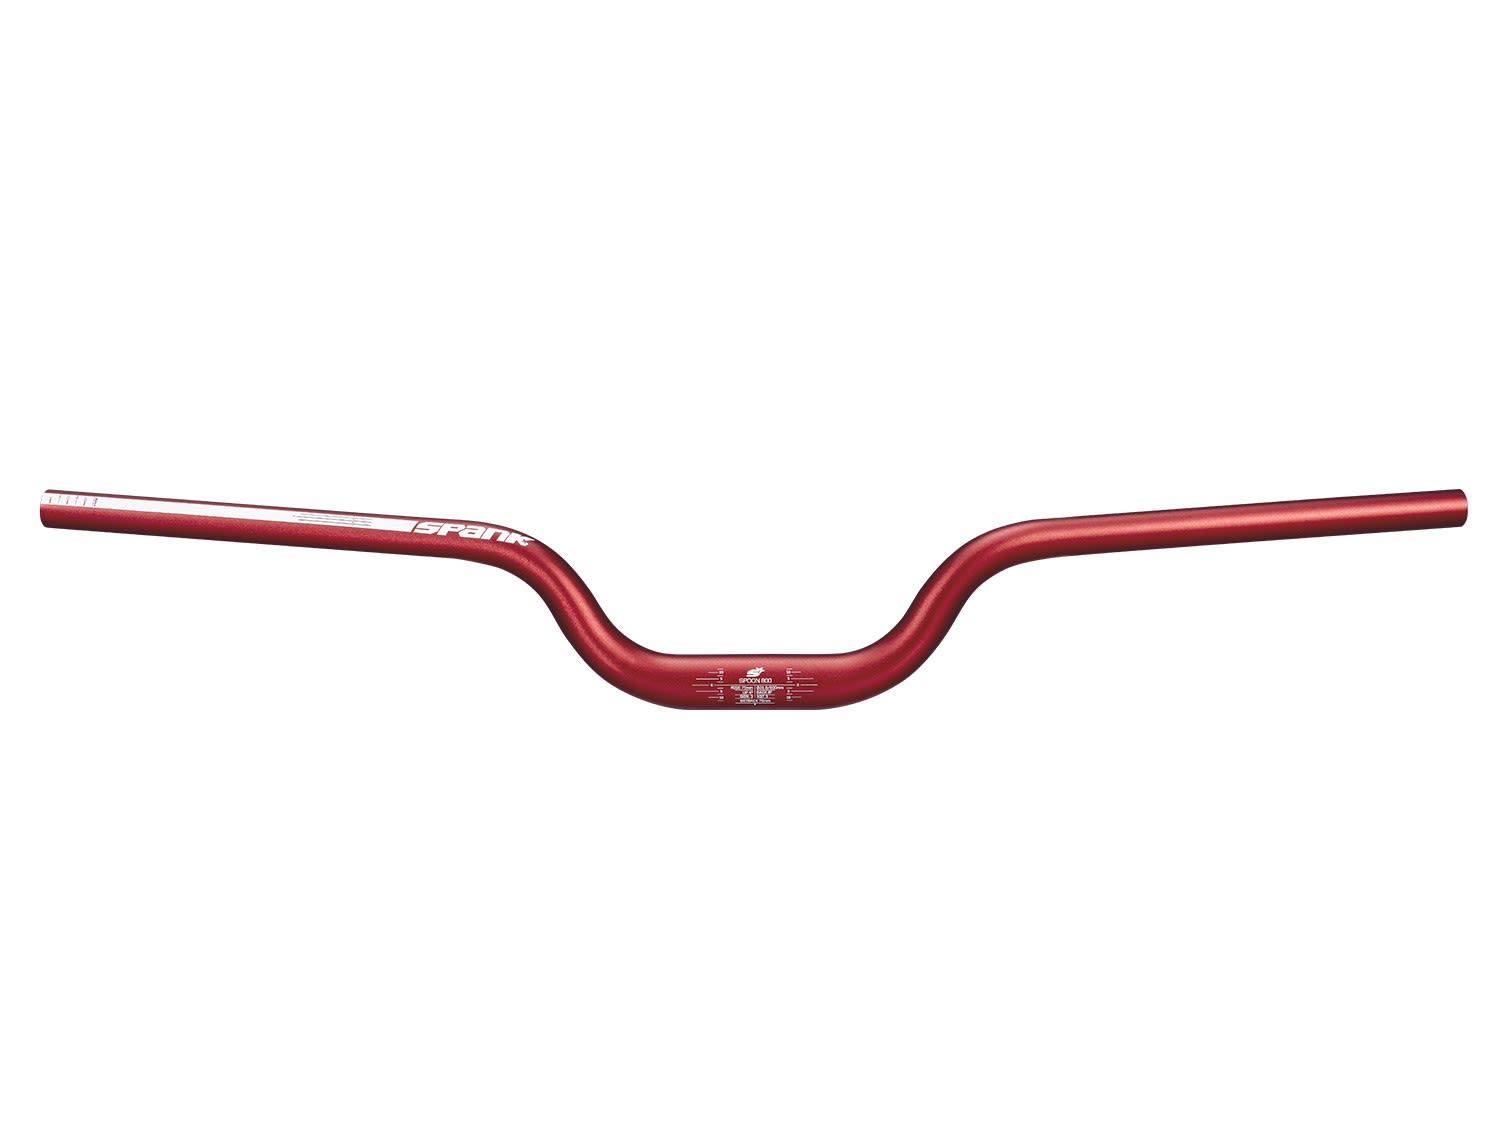 Spank Spoon 800 Fahrradlenker Rot, Fahrradlenker, Größe 40 mm - Farbe Red SP-BAR-0068